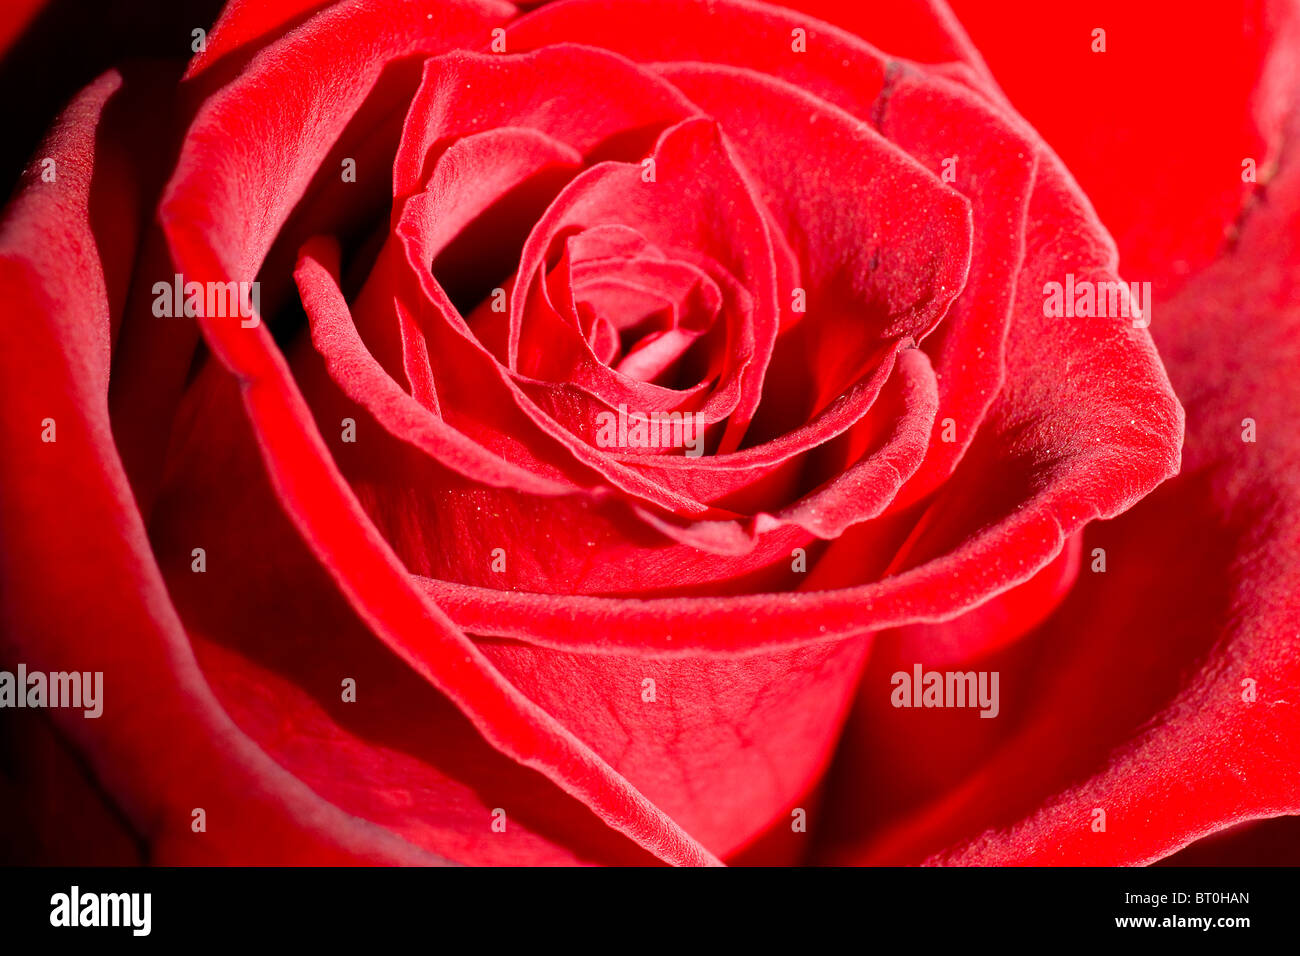 Romantisch schöne rote rose Nahaufnahme. Selektiven Fokus. Stockfoto